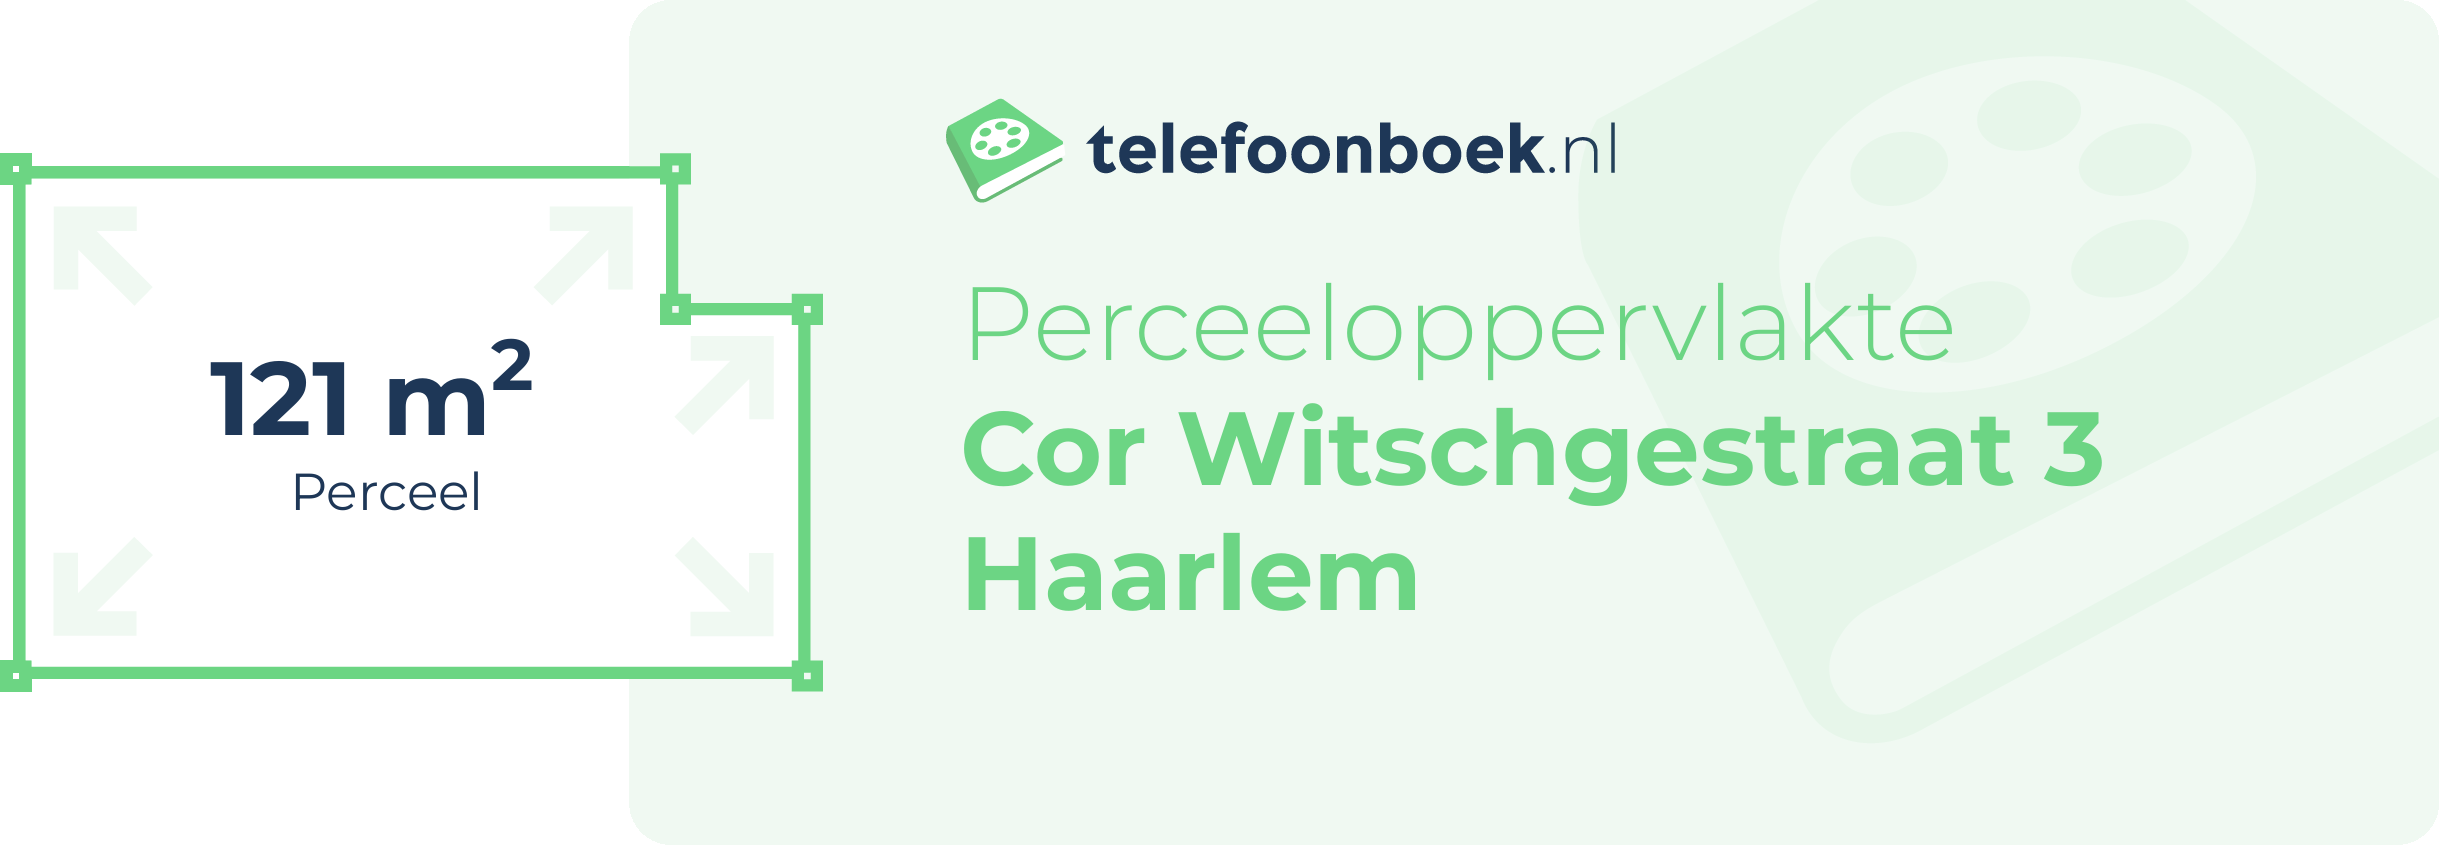 Perceeloppervlakte Cor Witschgestraat 3 Haarlem